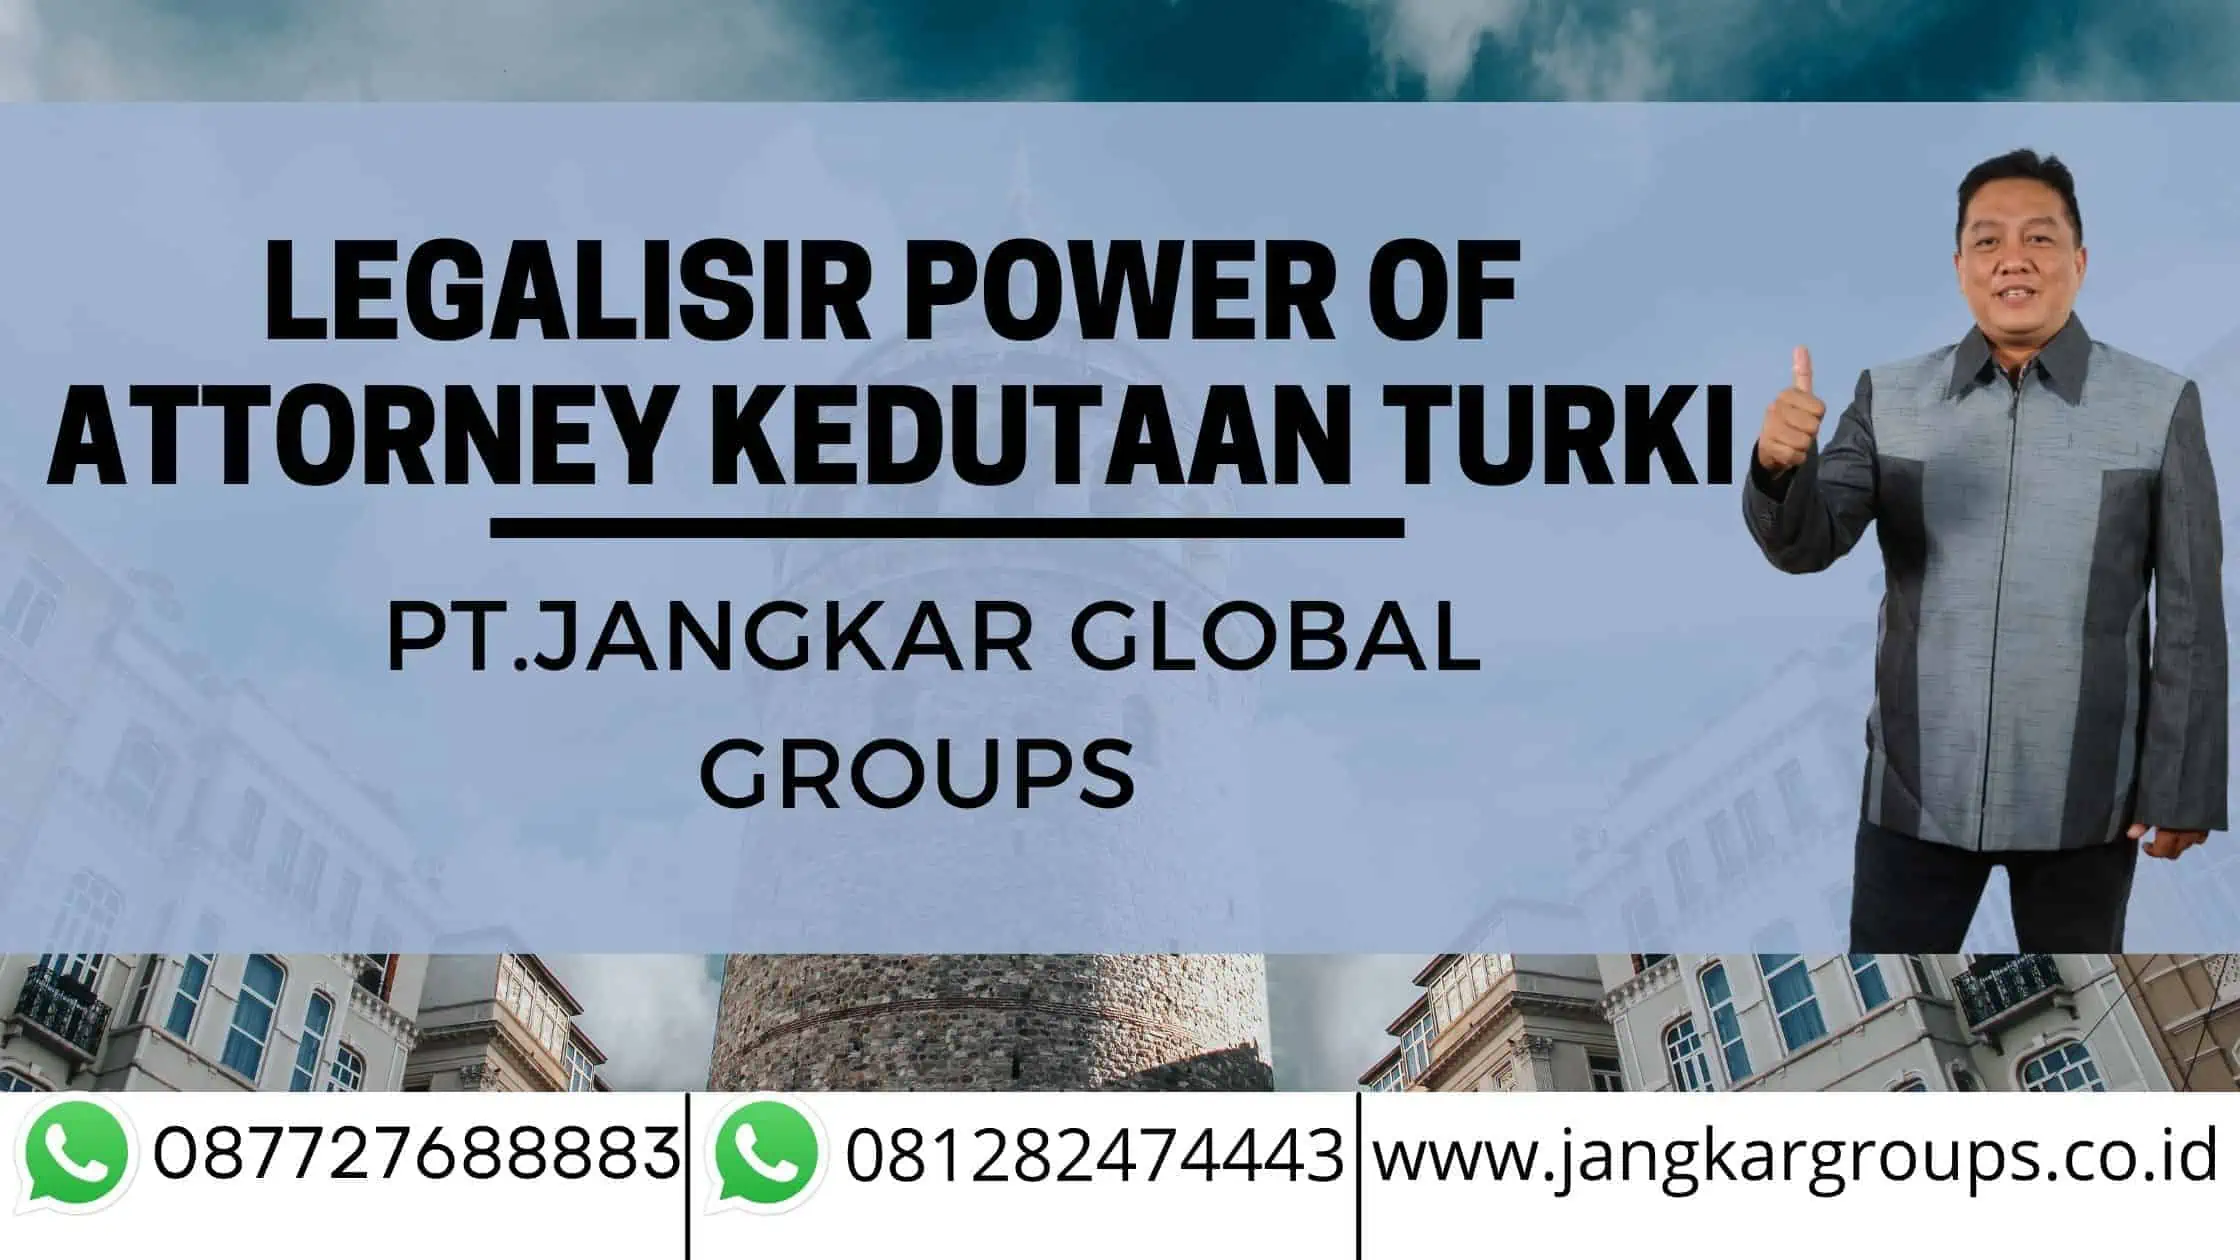 LEGALISIR POWER OF ATTORNEY KEDUTAAN TURKI